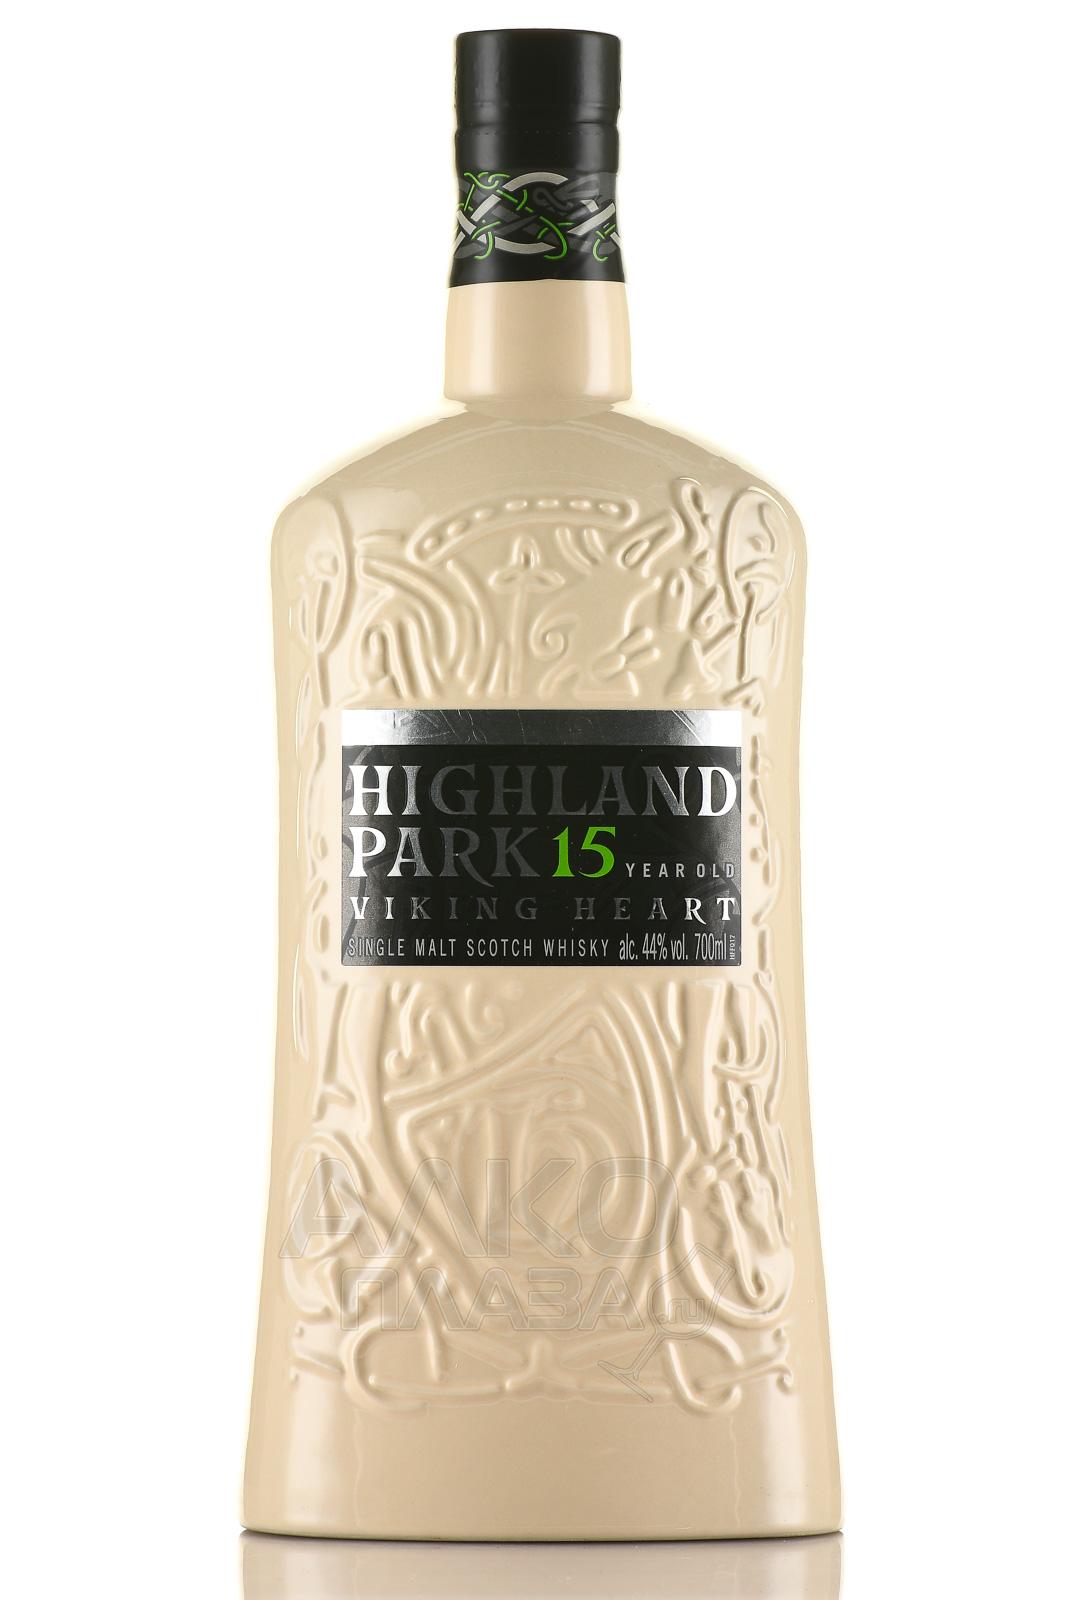 Highland Park 15 Year Old Viking Heart - купить виски Хайланд Парк 15 лет  Викинг Харт 0.7 л - цена